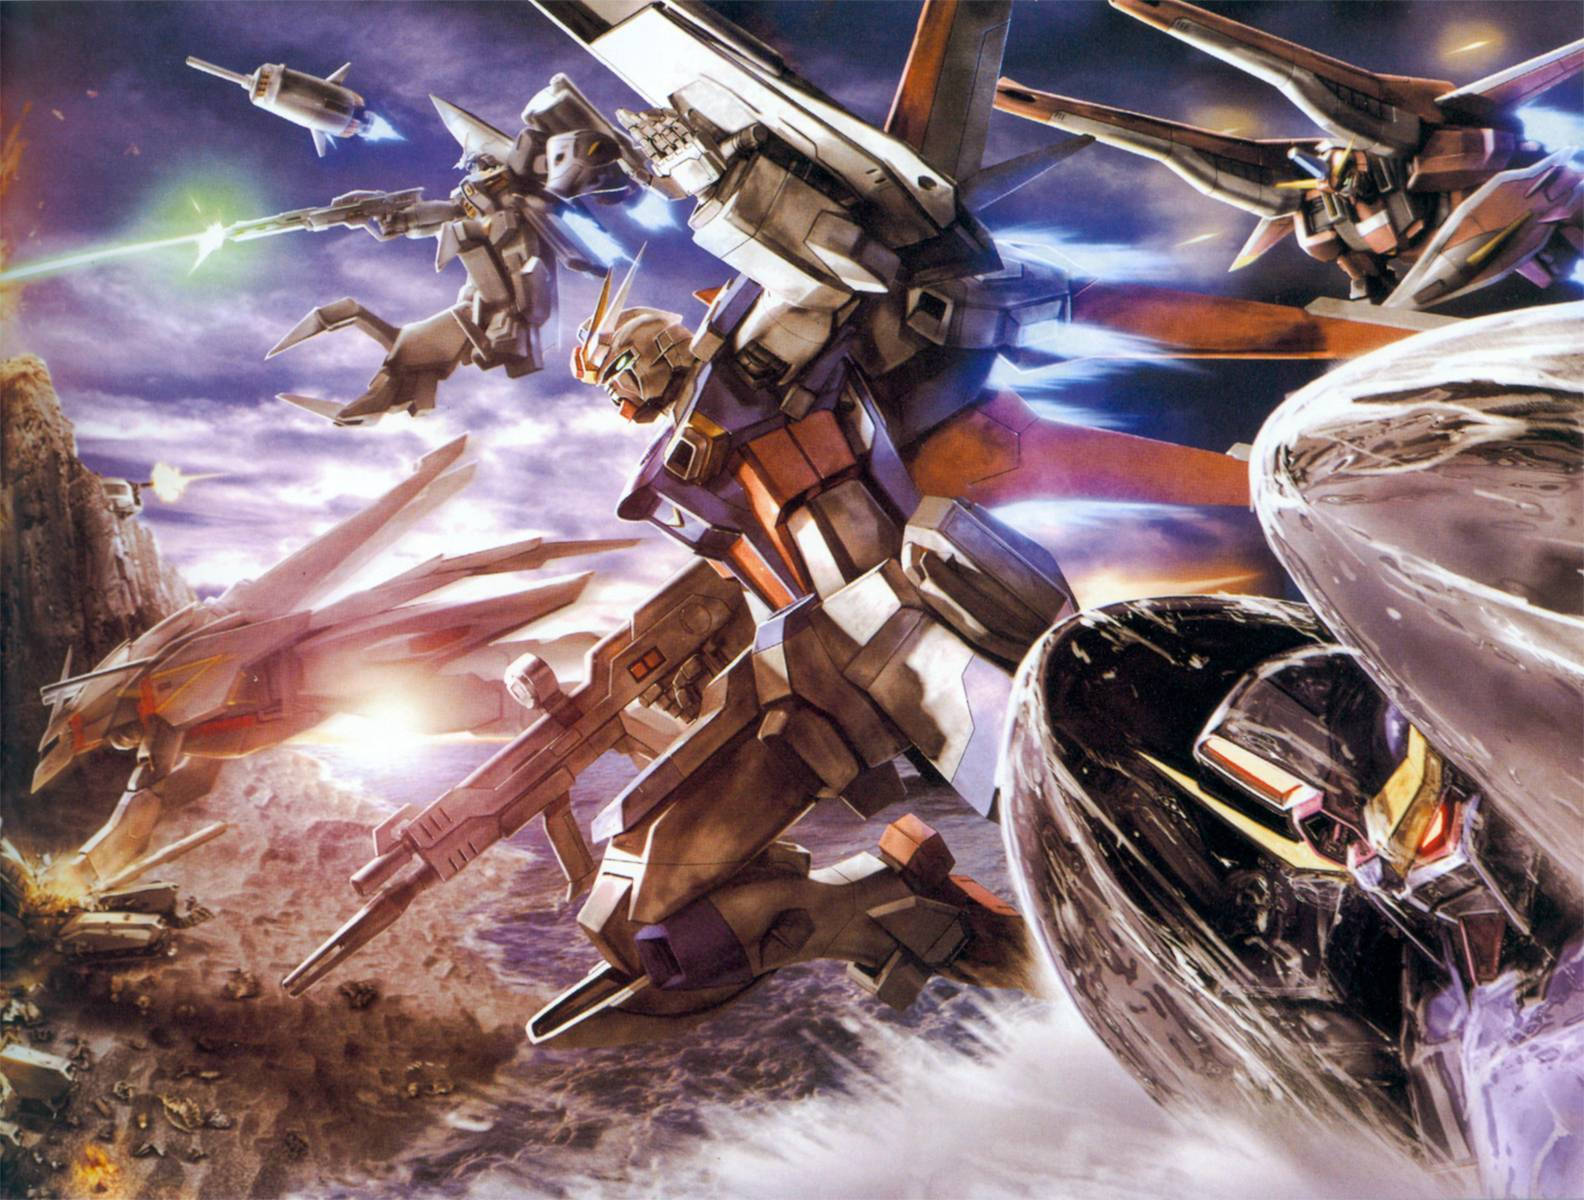 Battle Against Mobile Suit Gundam Wallpaper